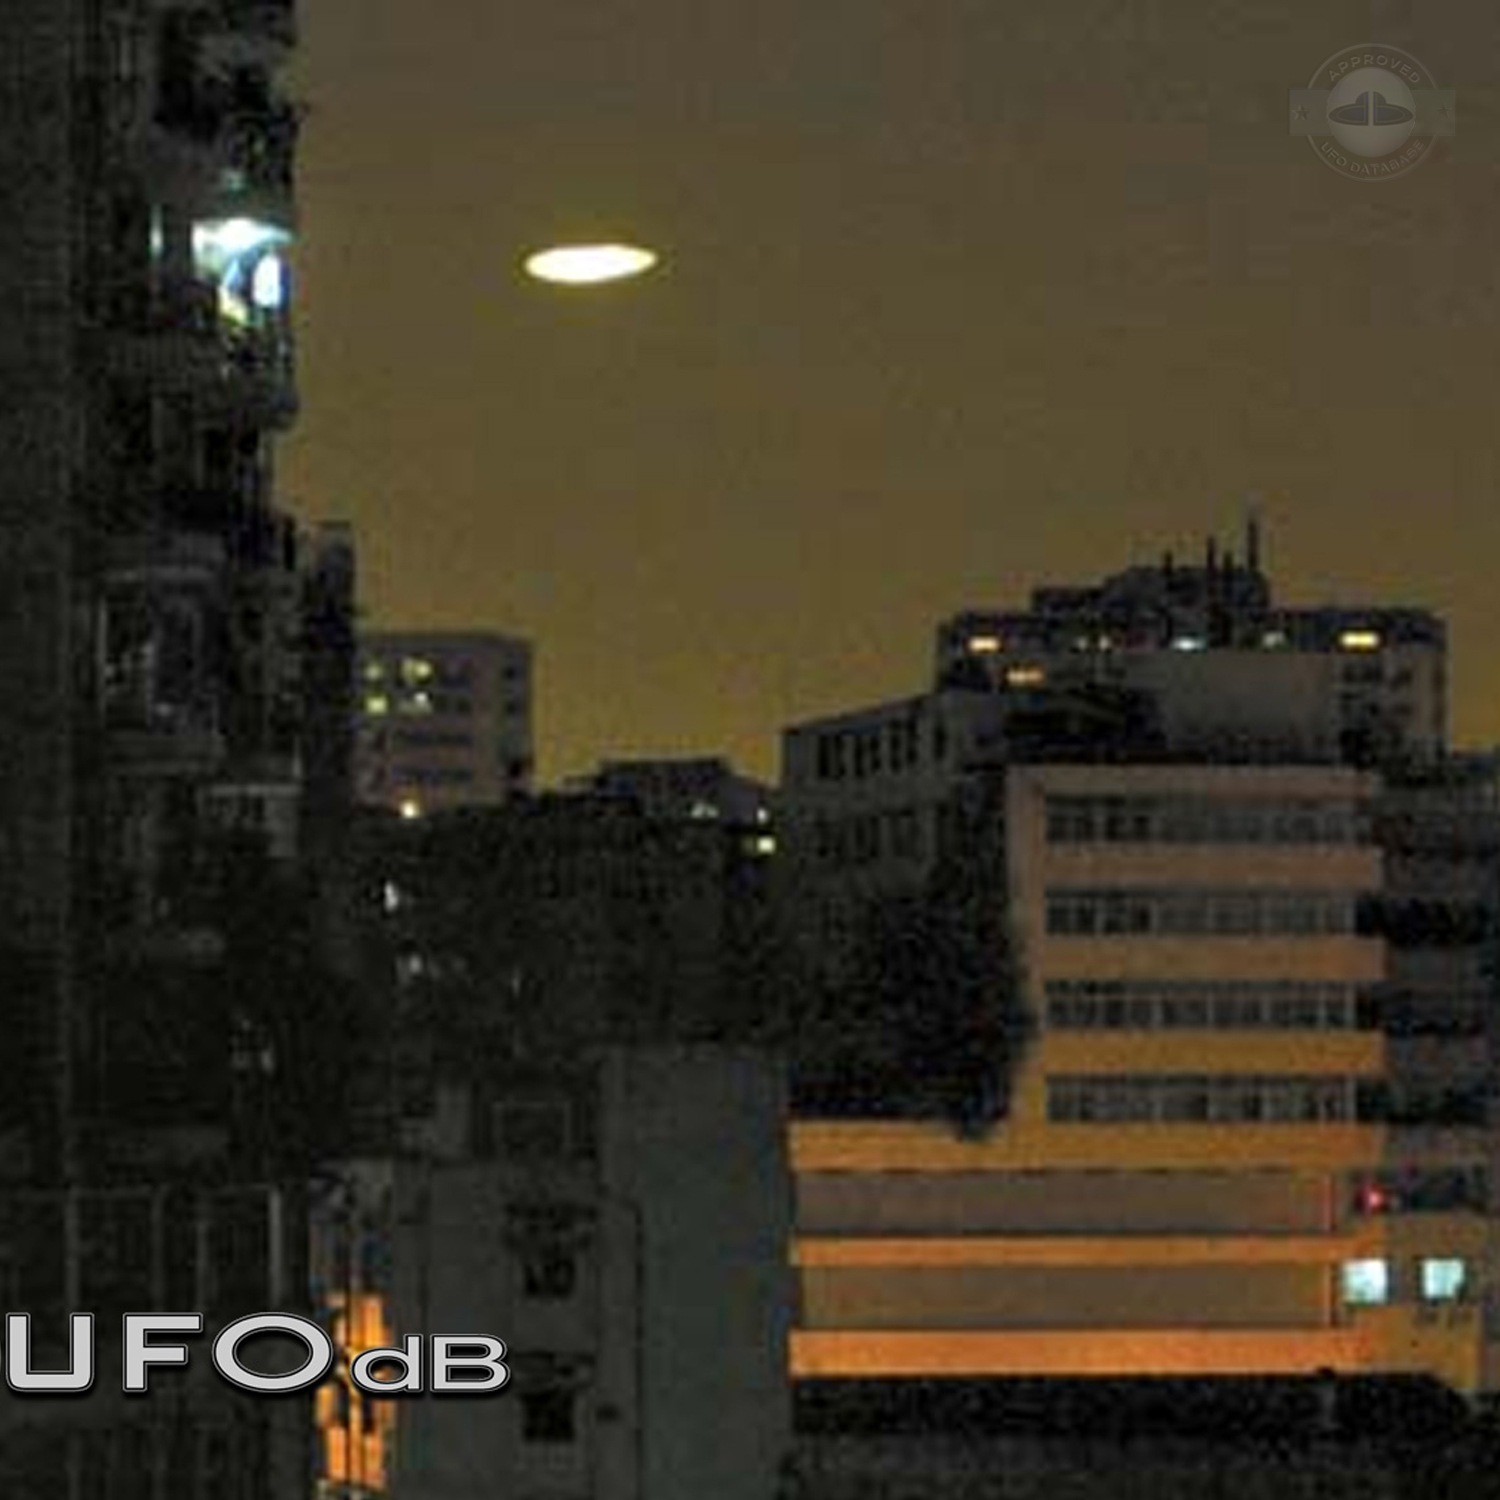 Mass UFO Sighting in Guangzhou, Guangdong | China UFO picture | 2009 UFO Picture #160-2